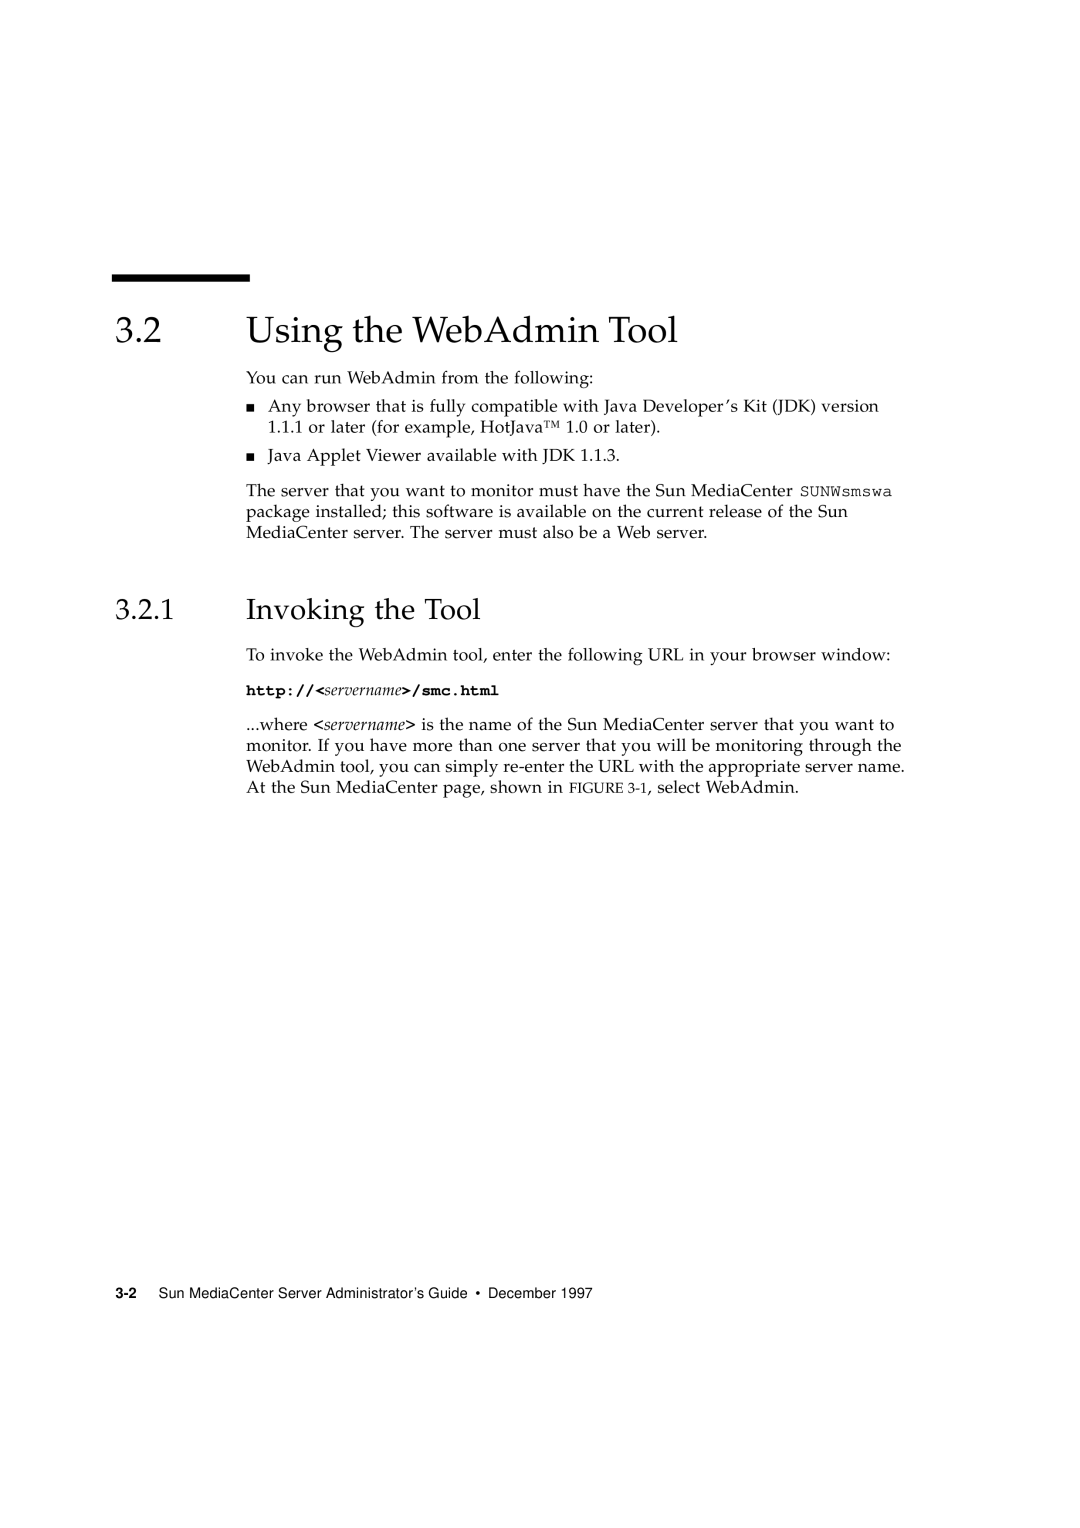 Sun Microsystems 2.1 manual Using the WebAdmin Tool, Invoking the Tool 